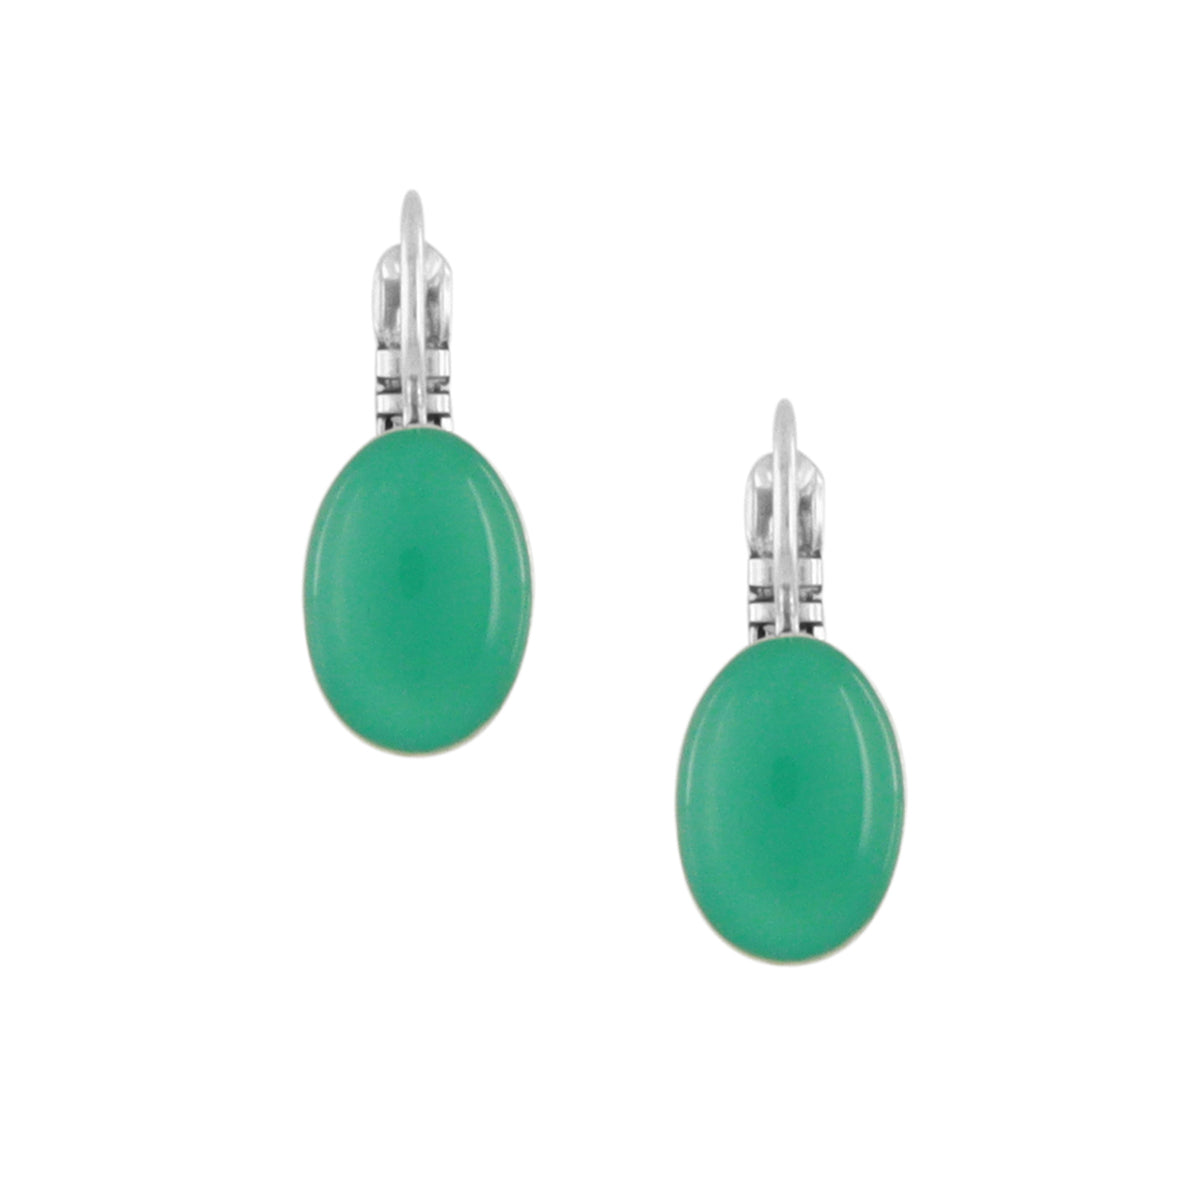 Taratata Green Lever Back Earrings E24-09771-10T